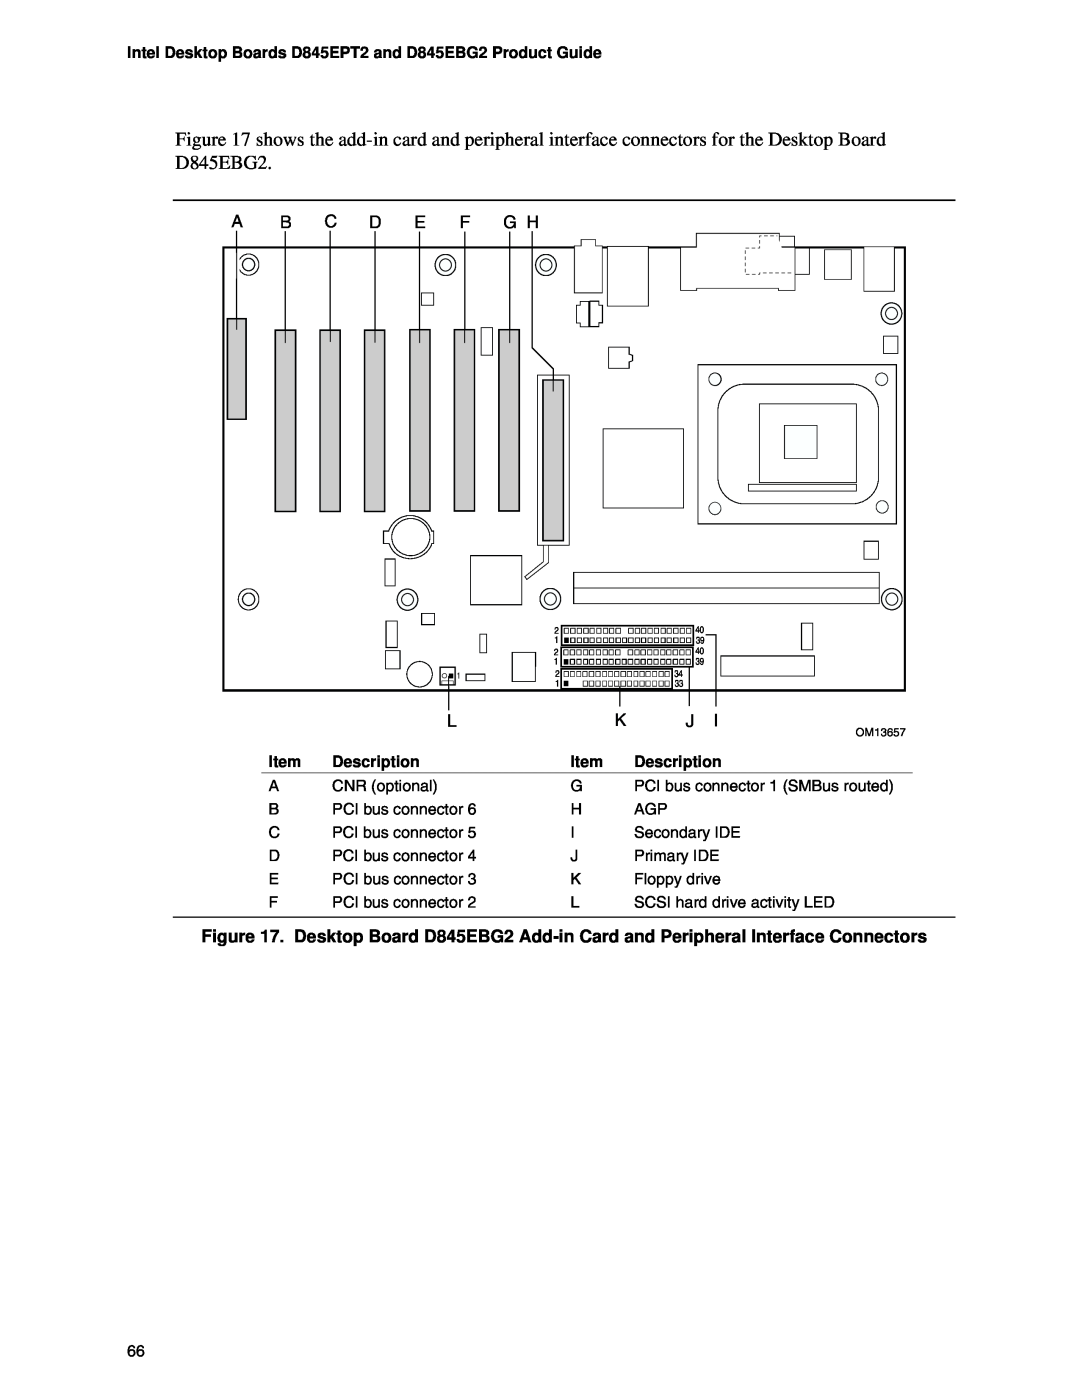 Intel manual Intel Desktop Boards D845EPT2 and D845EBG2 Product Guide, Description, OM13657 